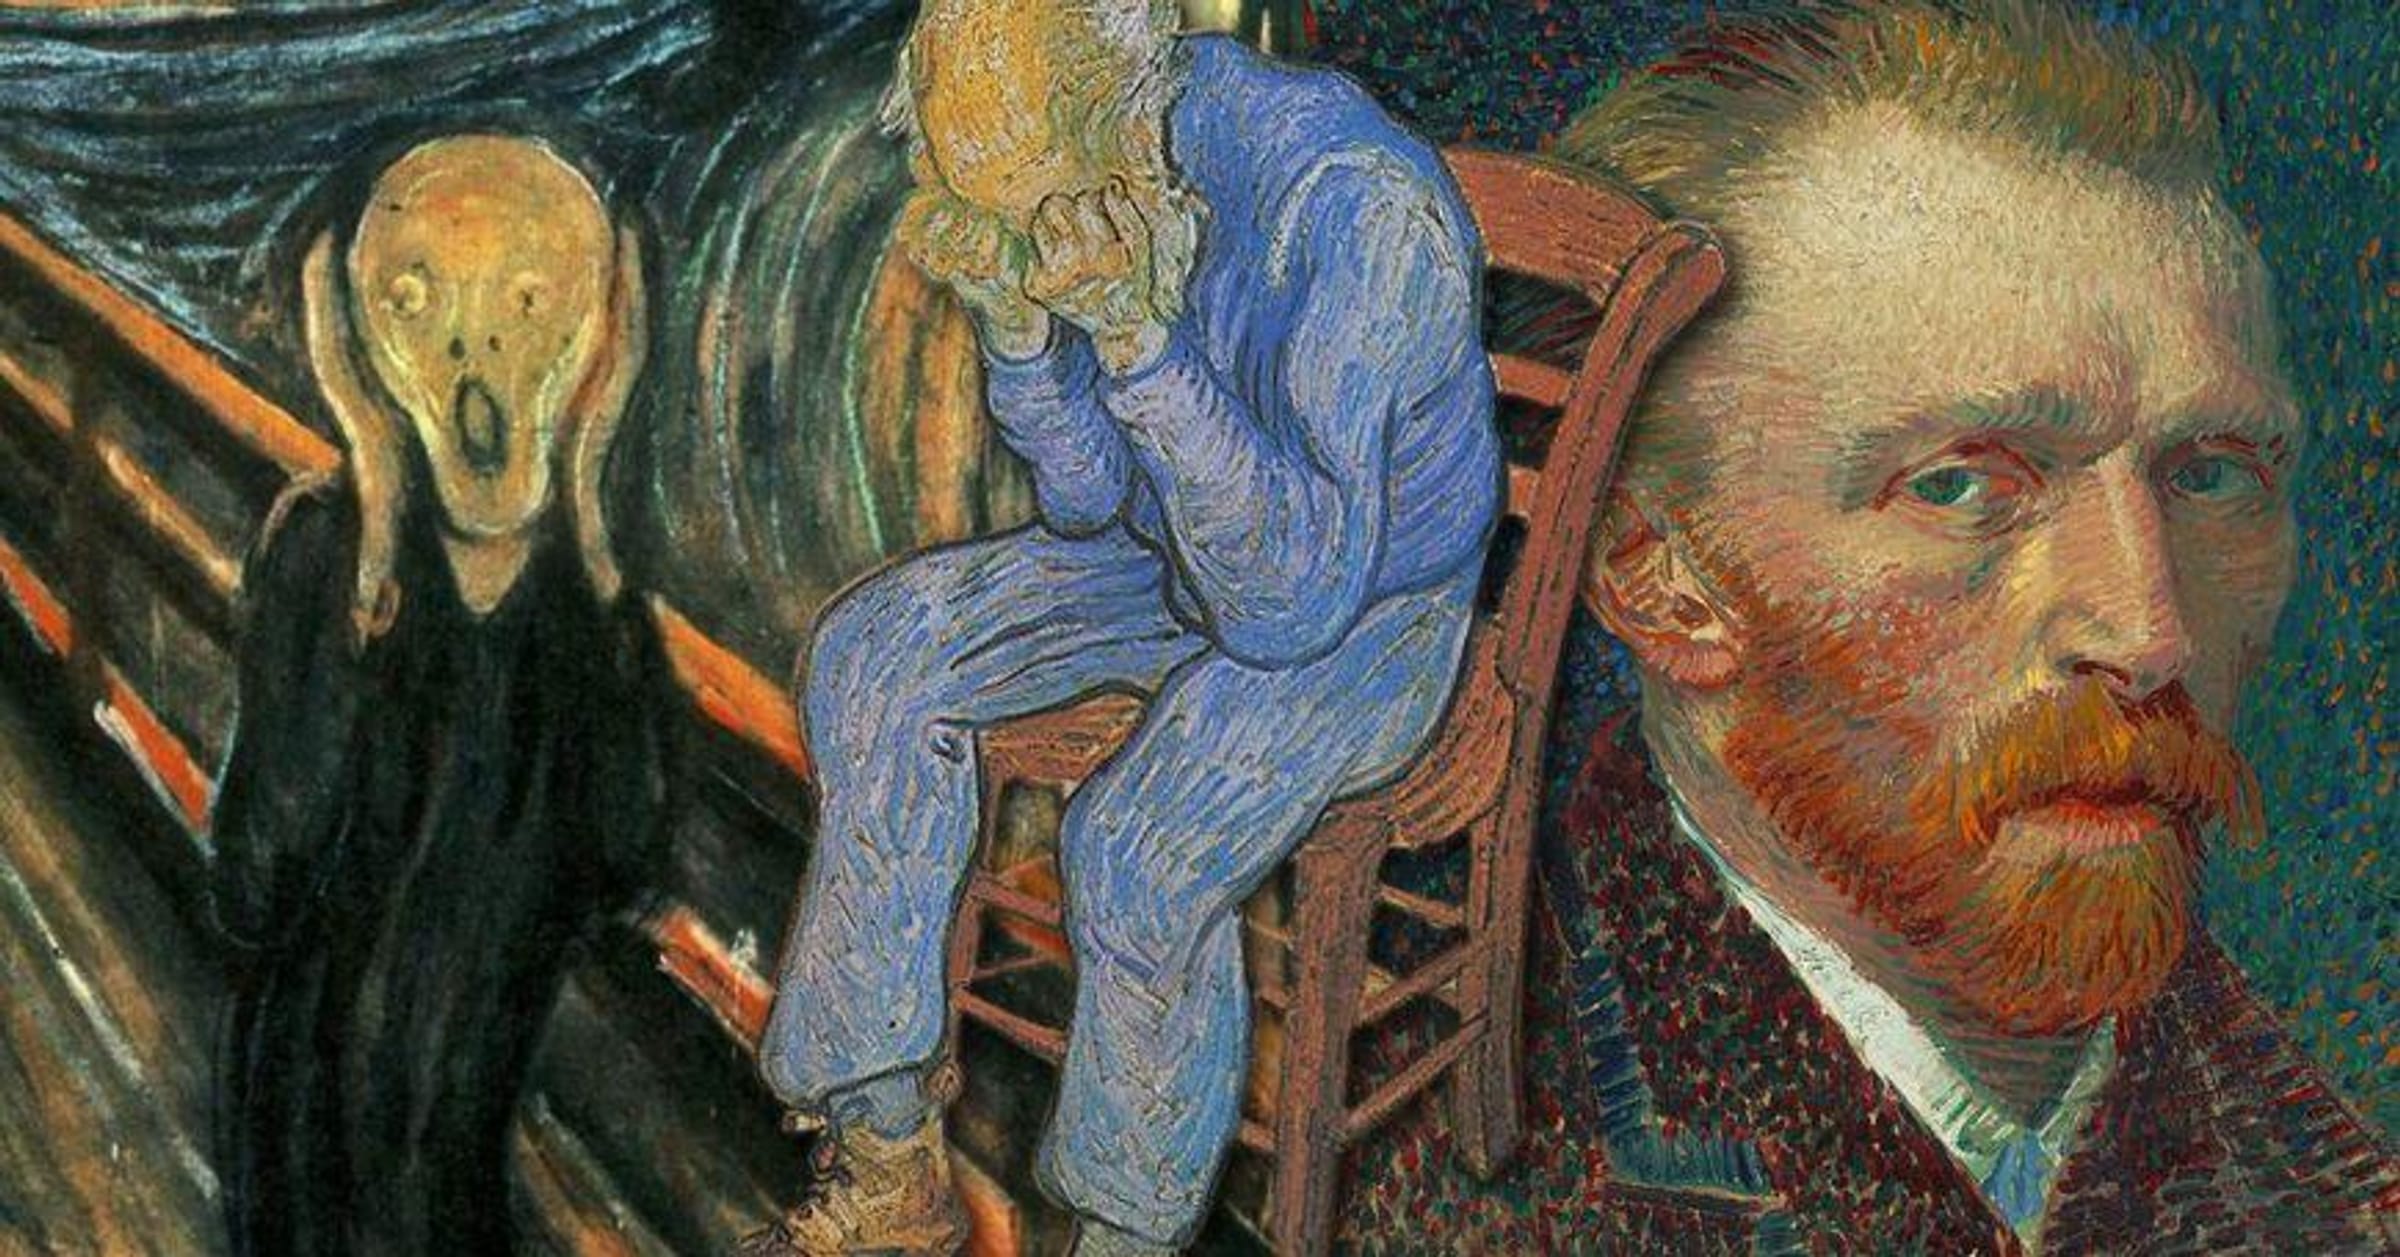 Vincent van Gogh - Wikimedia Commons